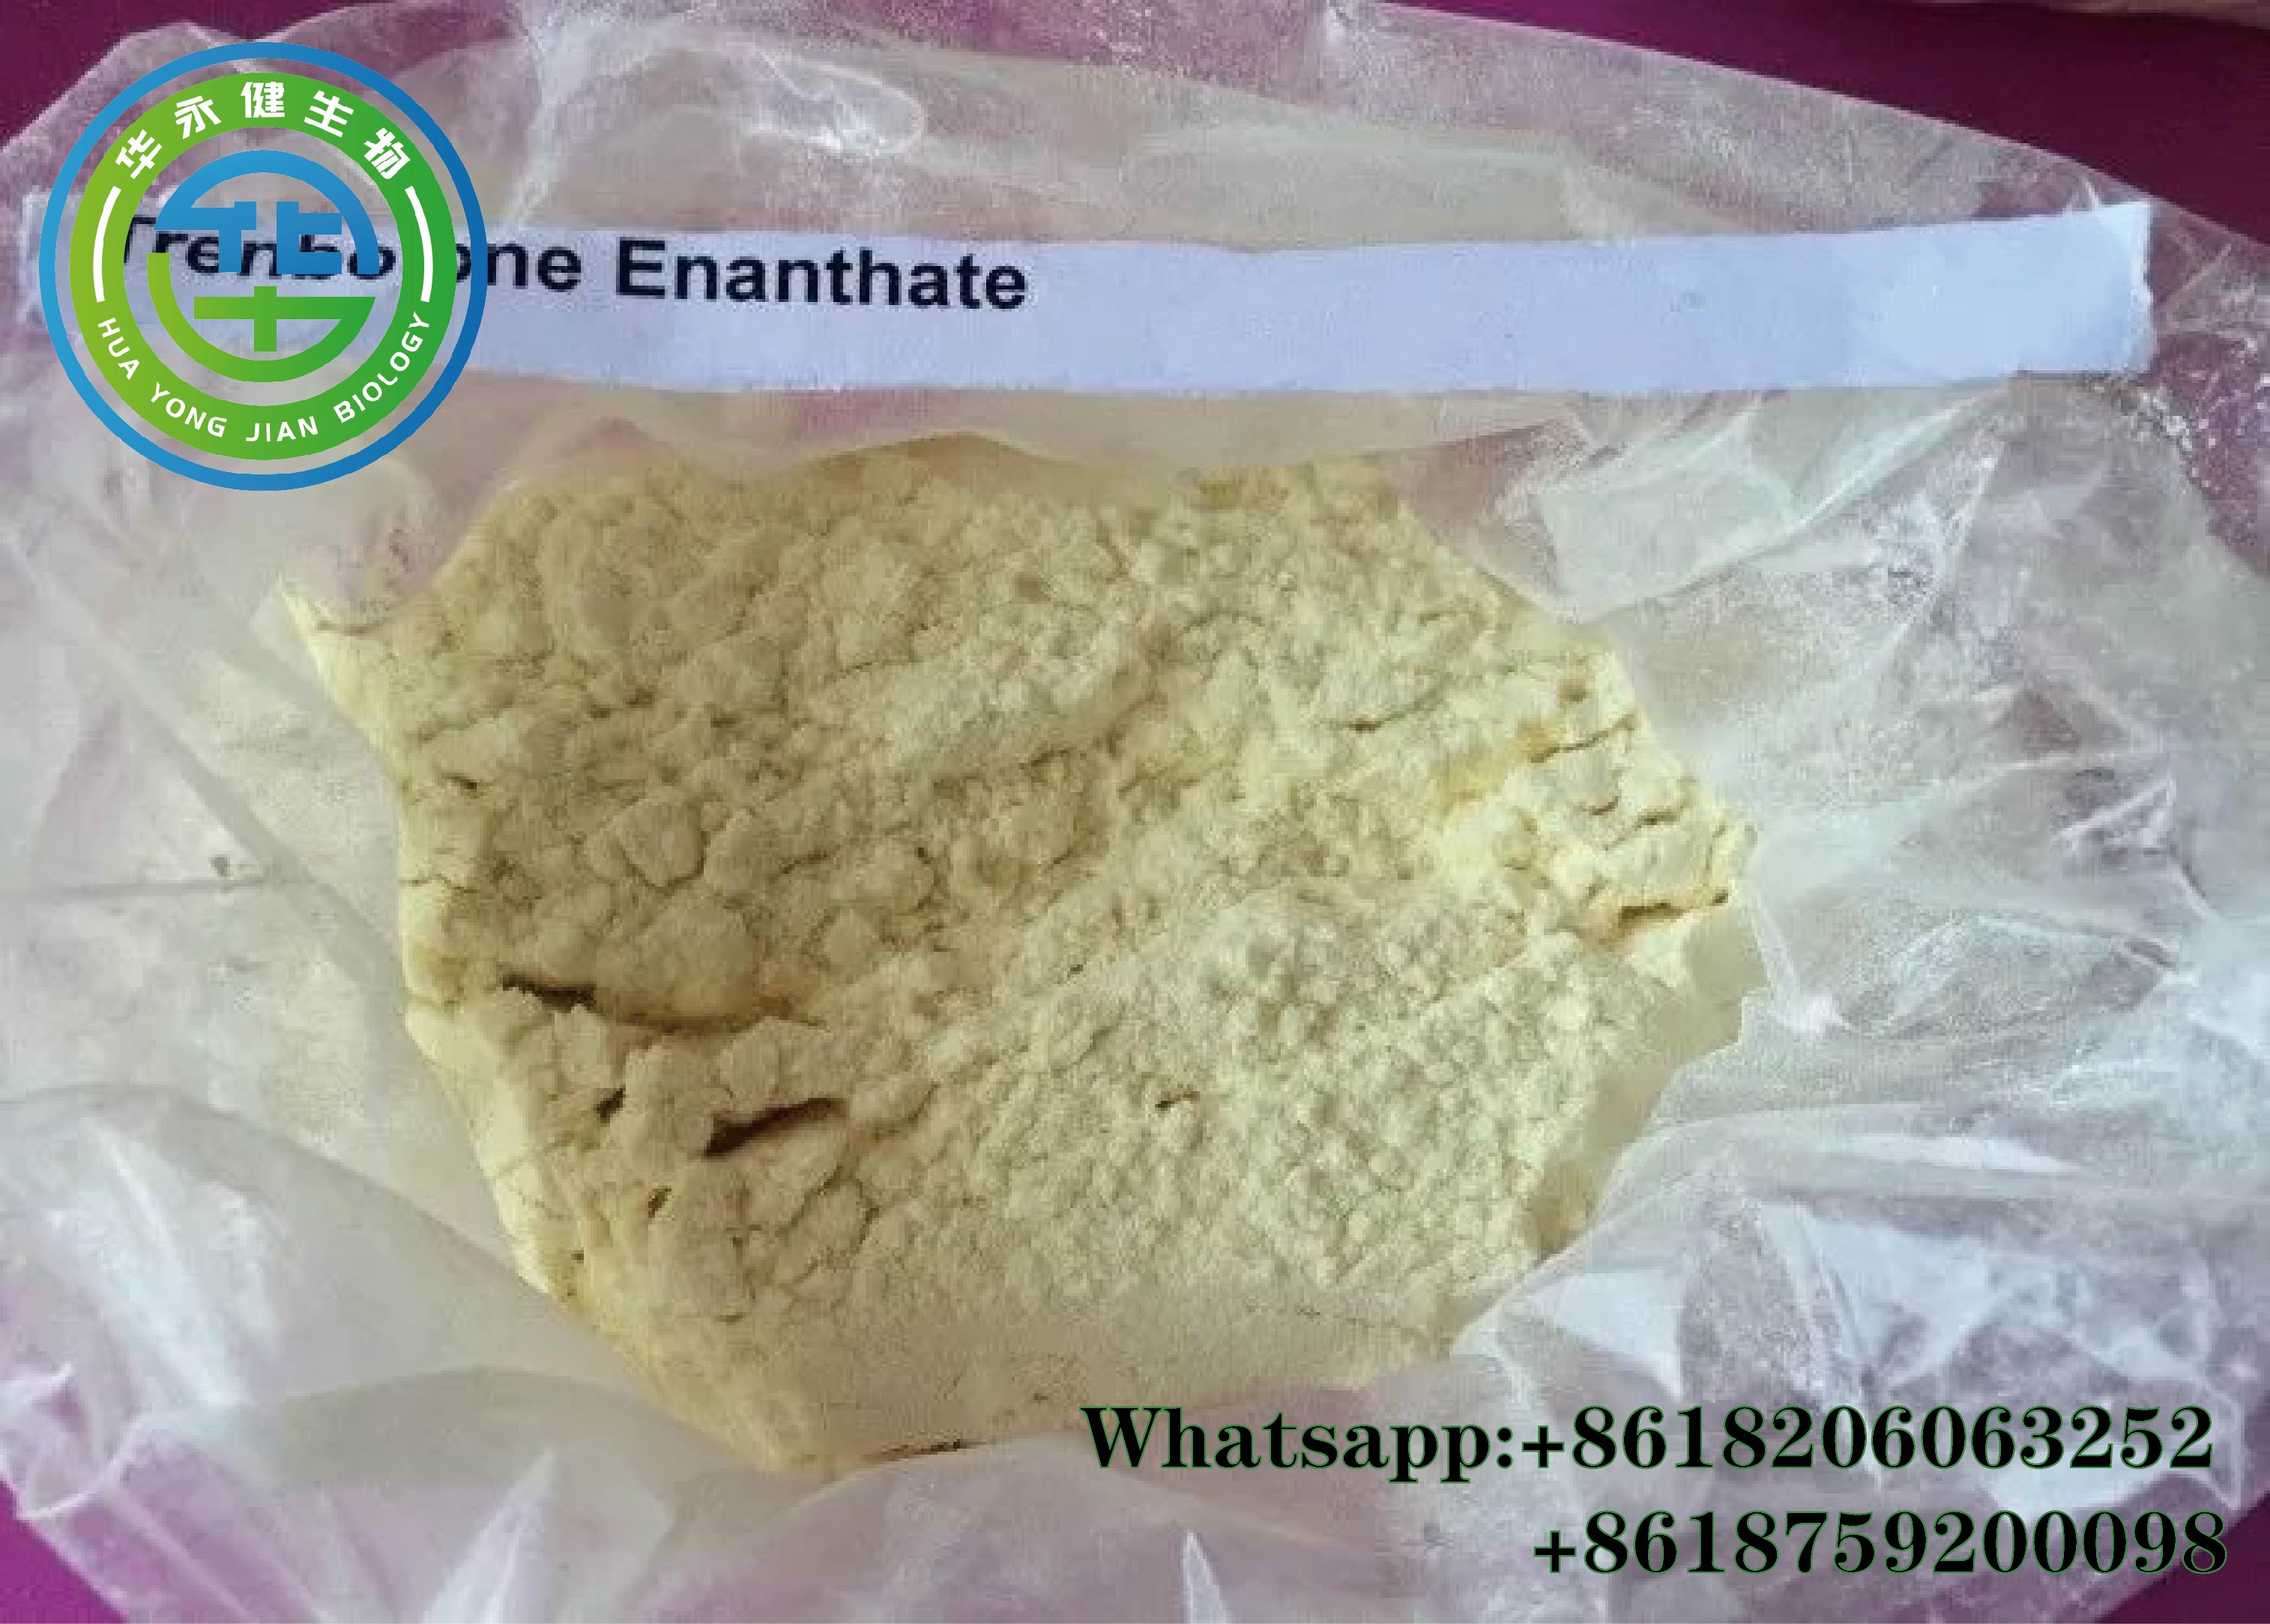 Trenbolone Enanthate/Tren E trenbolone powder for Promote Healing CAS 472-61-546